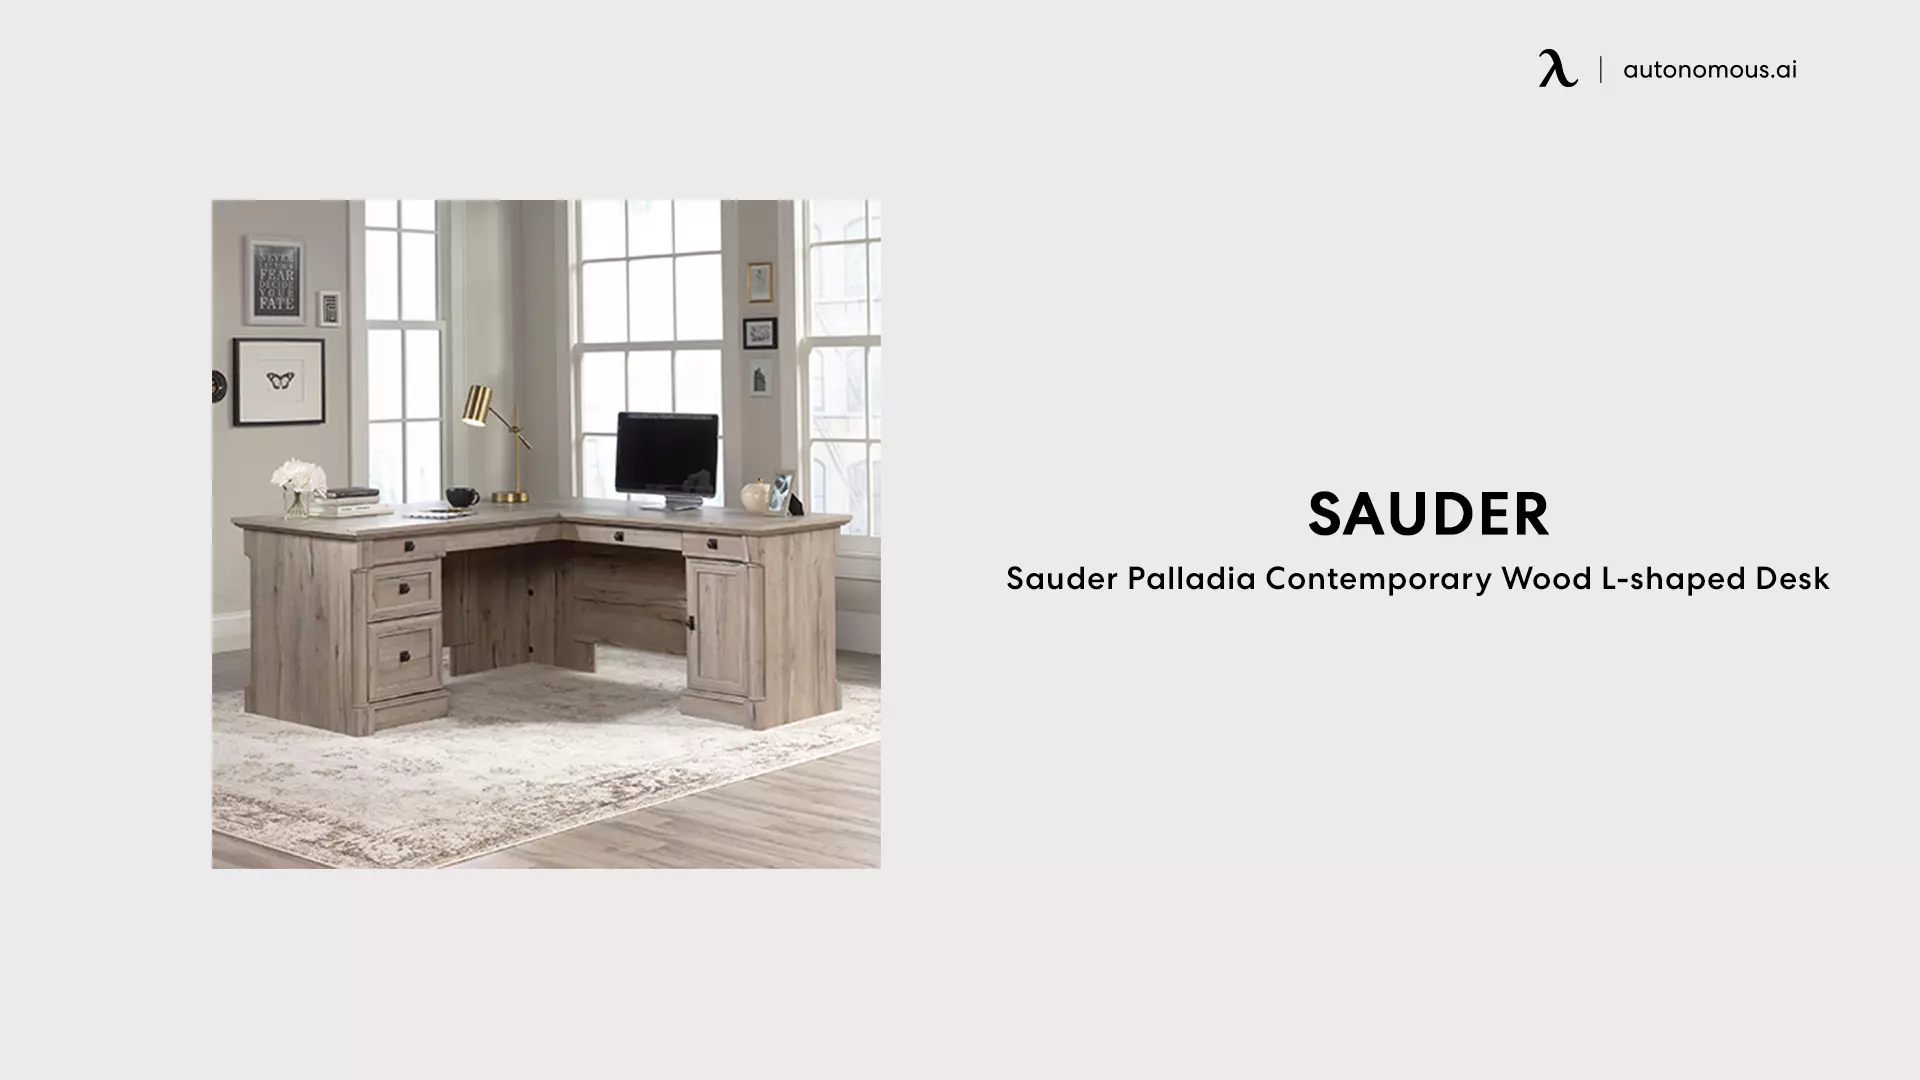 Sauder Palladia Contemporary Wood L-shaped Desk